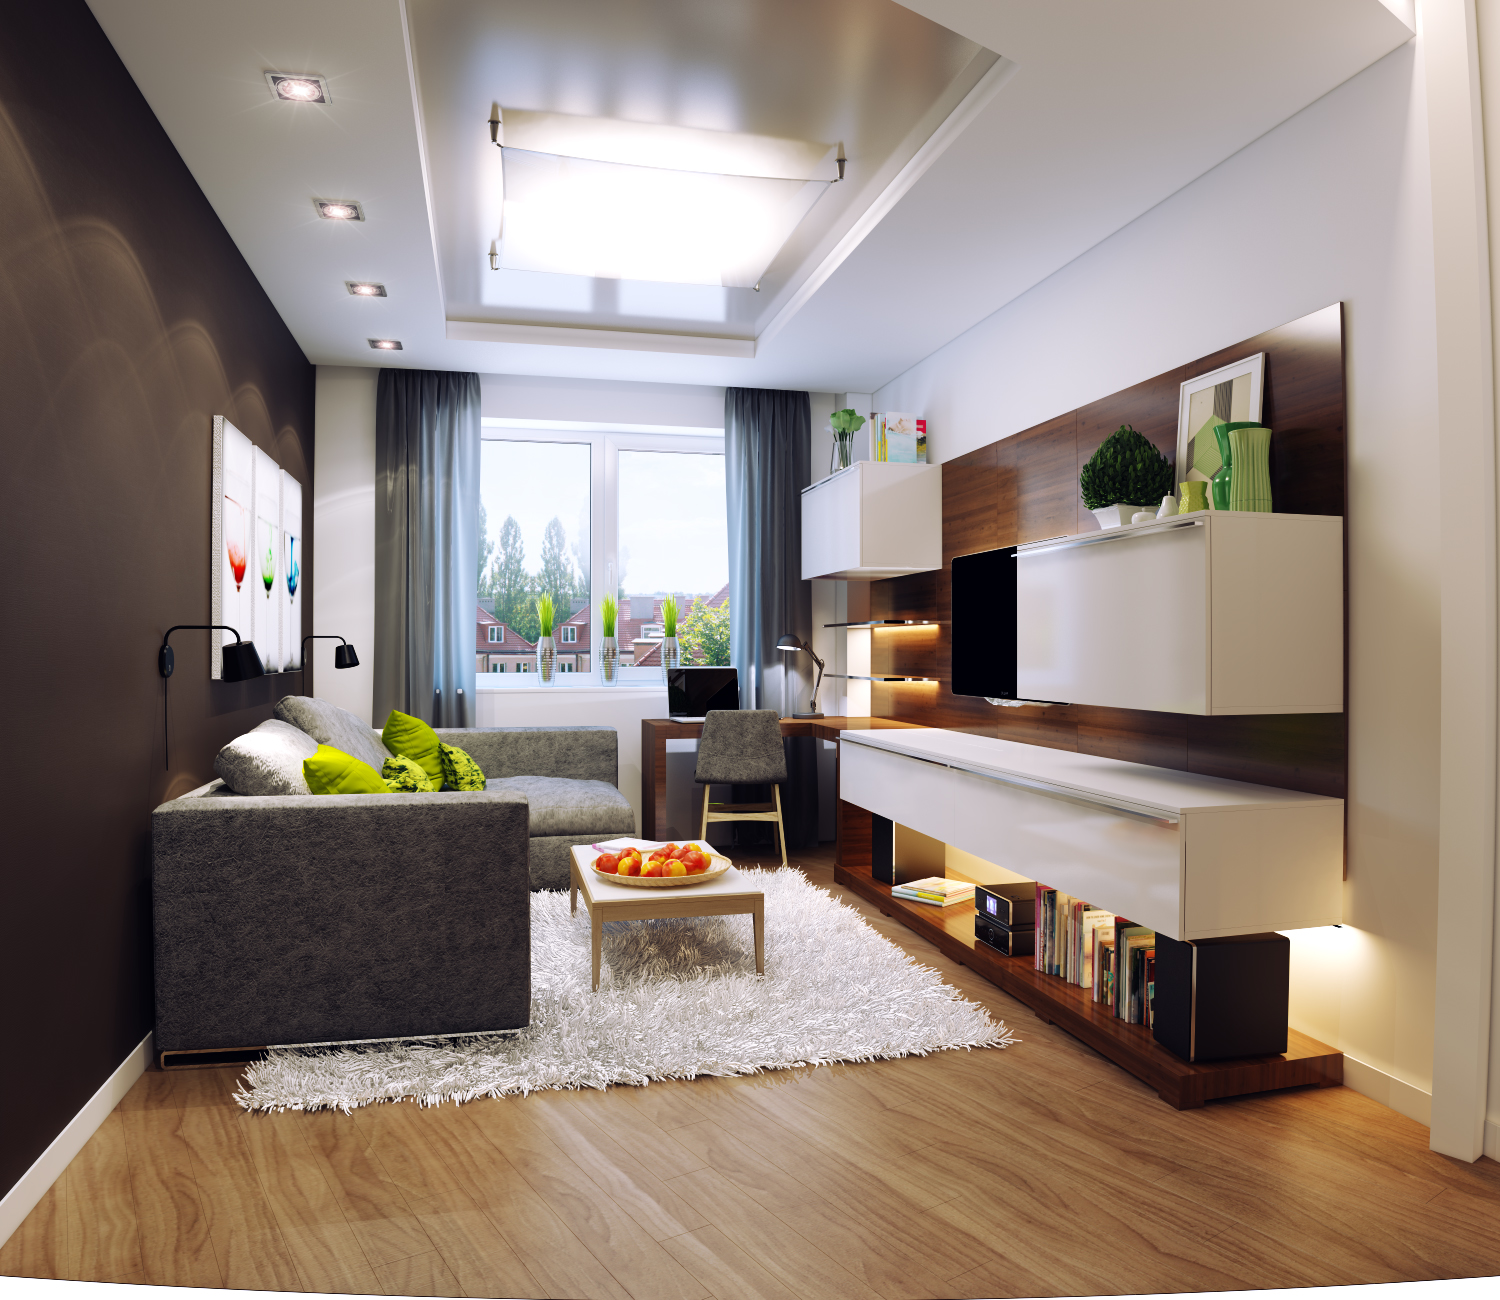 22-all-important-lighting-small-living-room-idea-homebnc